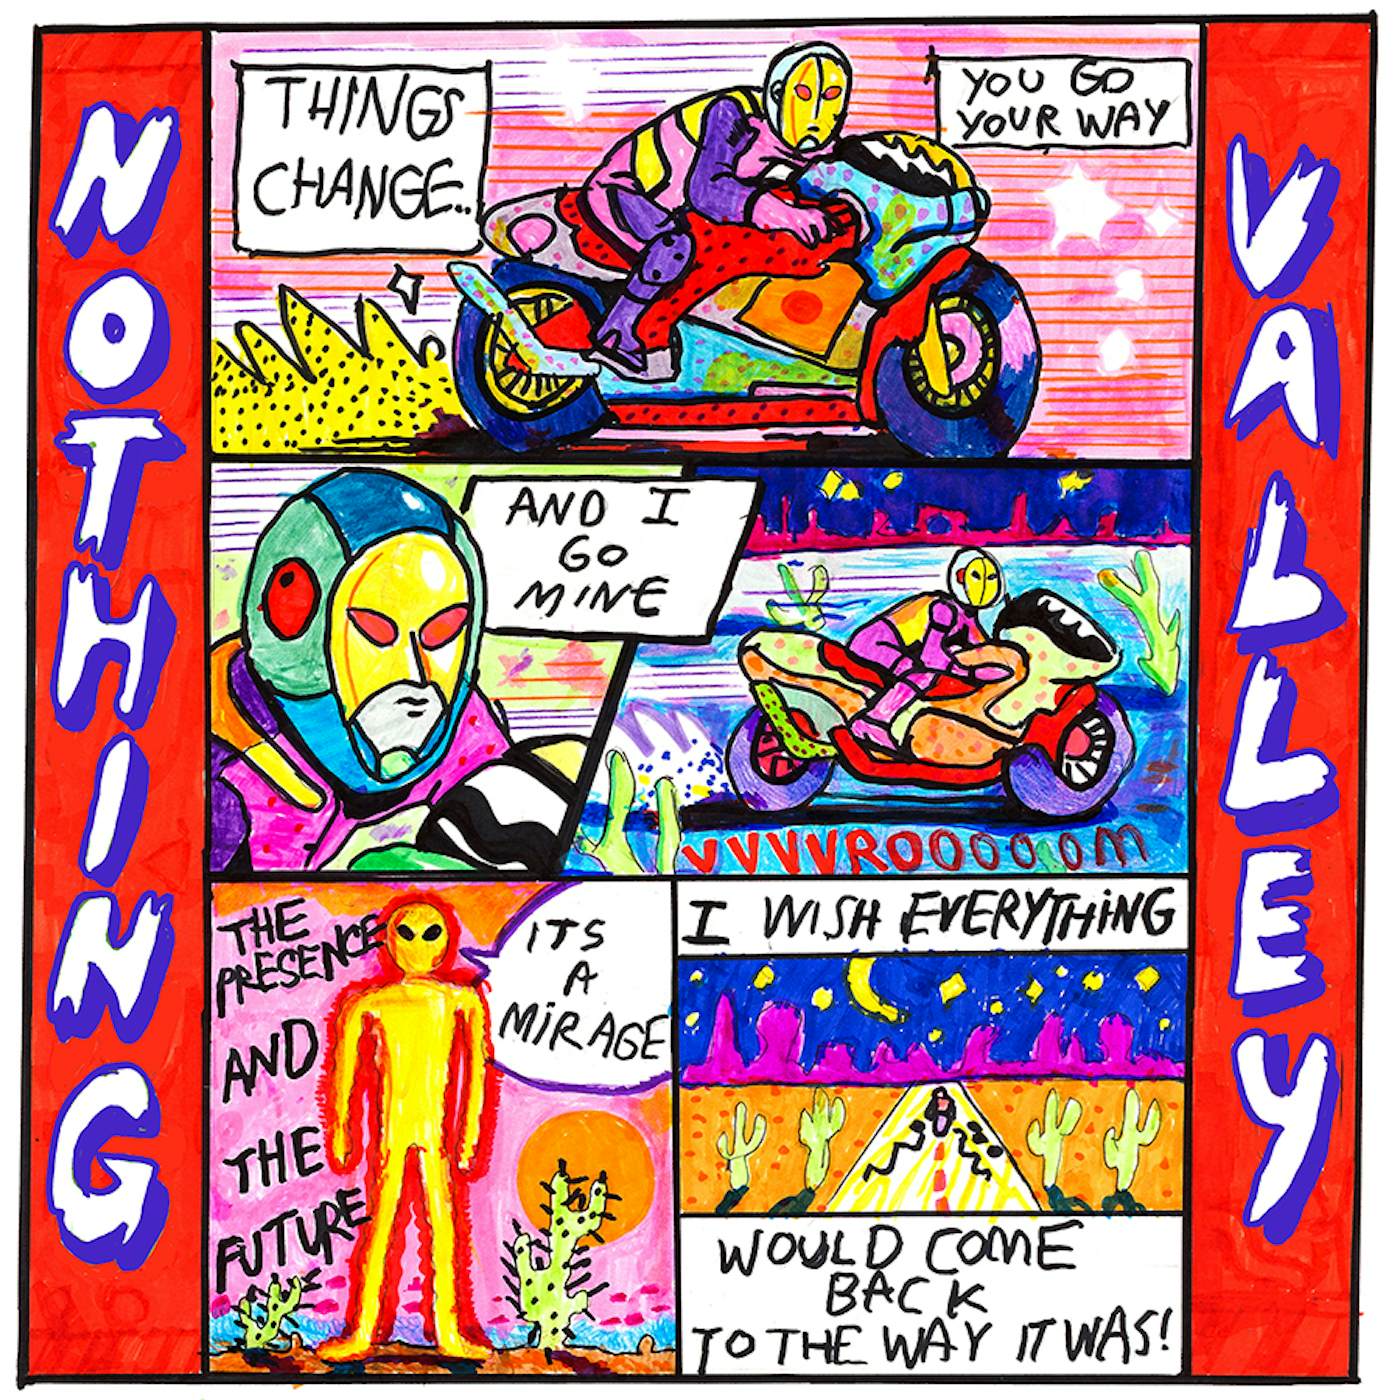 Melkbelly Nothing Valley Vinyl Record